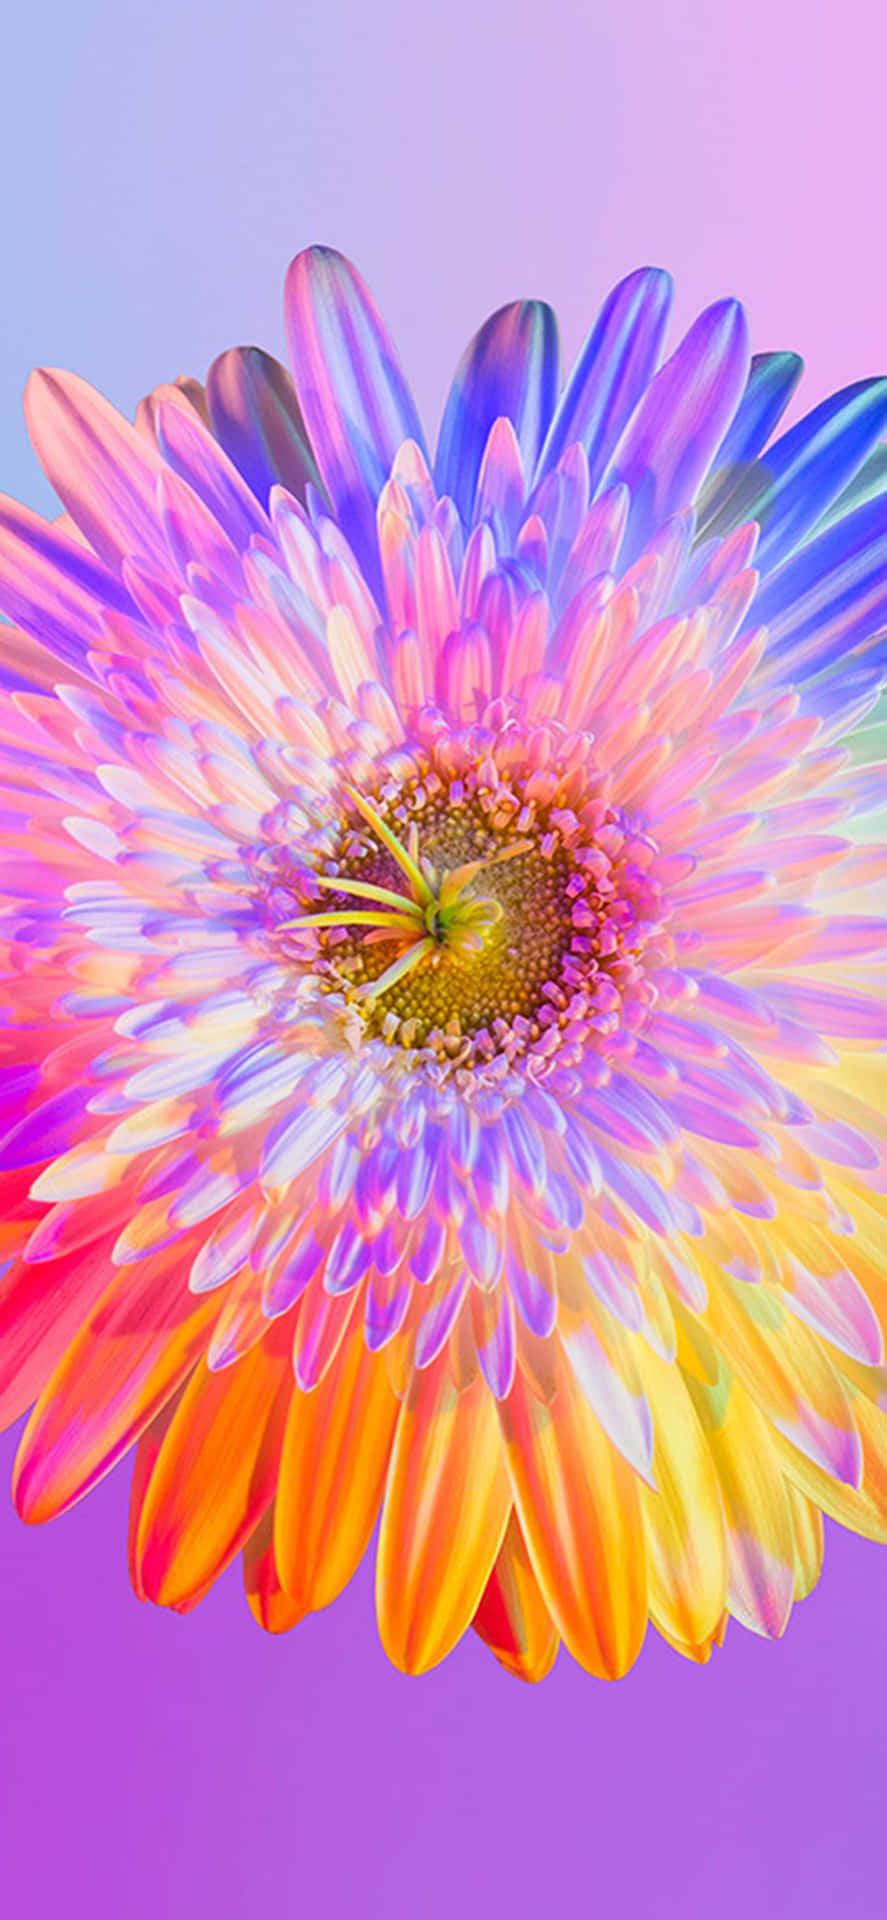 Lys op din dag med denne smukke Rainbow Flower iPhone tapet! Wallpaper